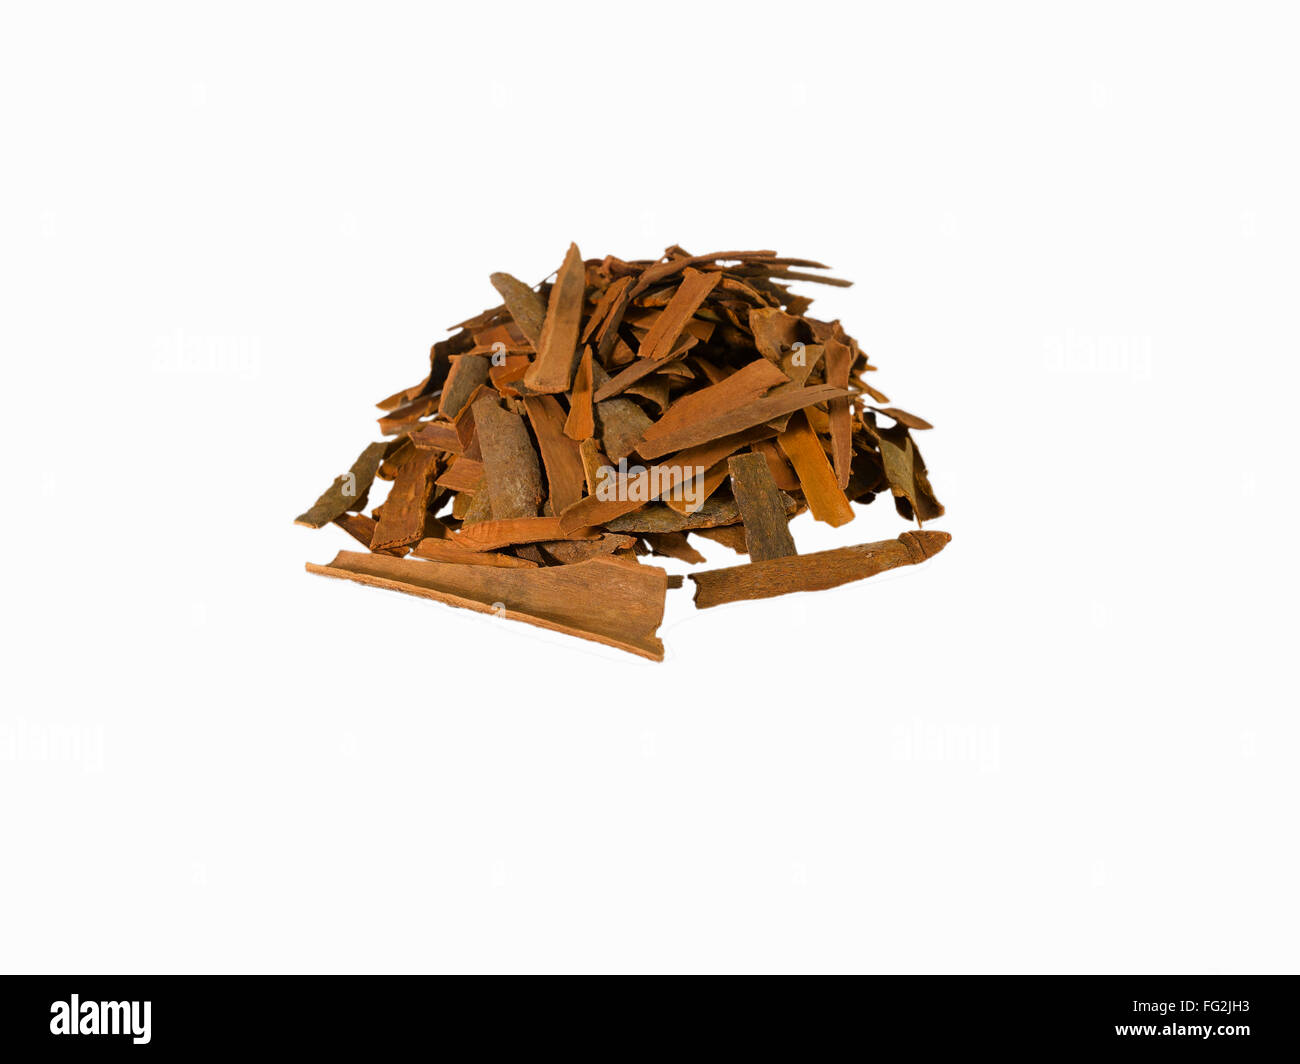 Spices ; cinnamon sticks or bark on white background Stock Photo